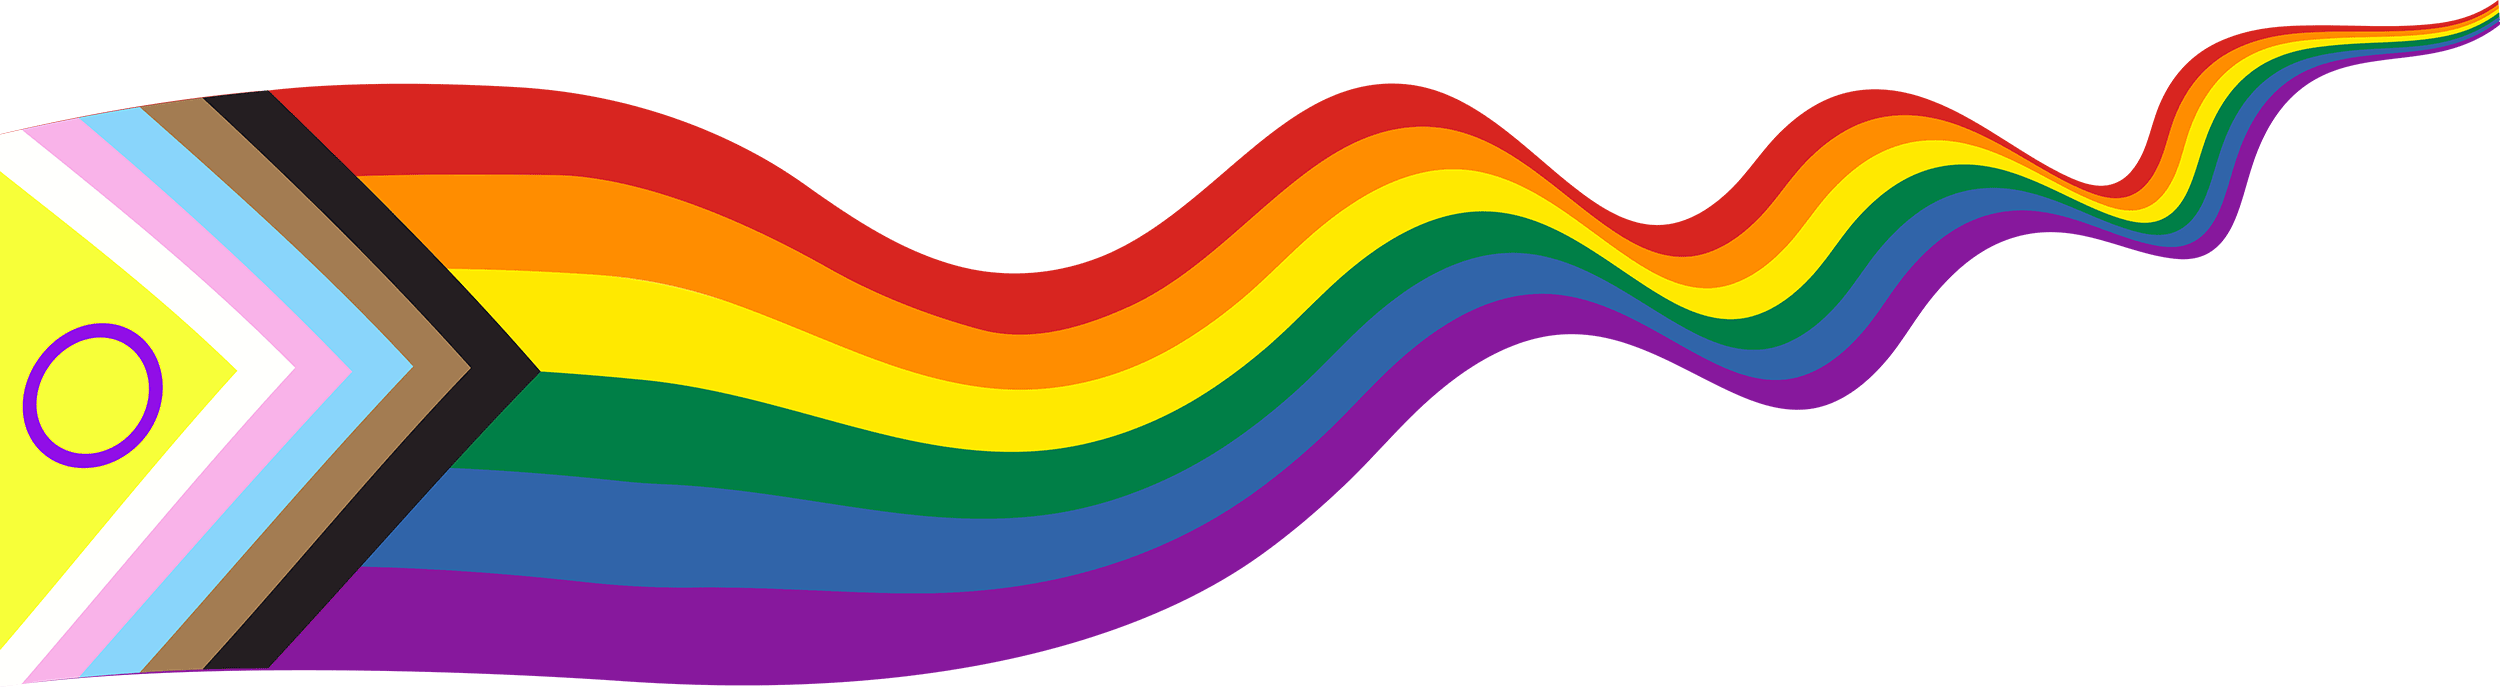 Graphic of the progressive Pride flag flowing.